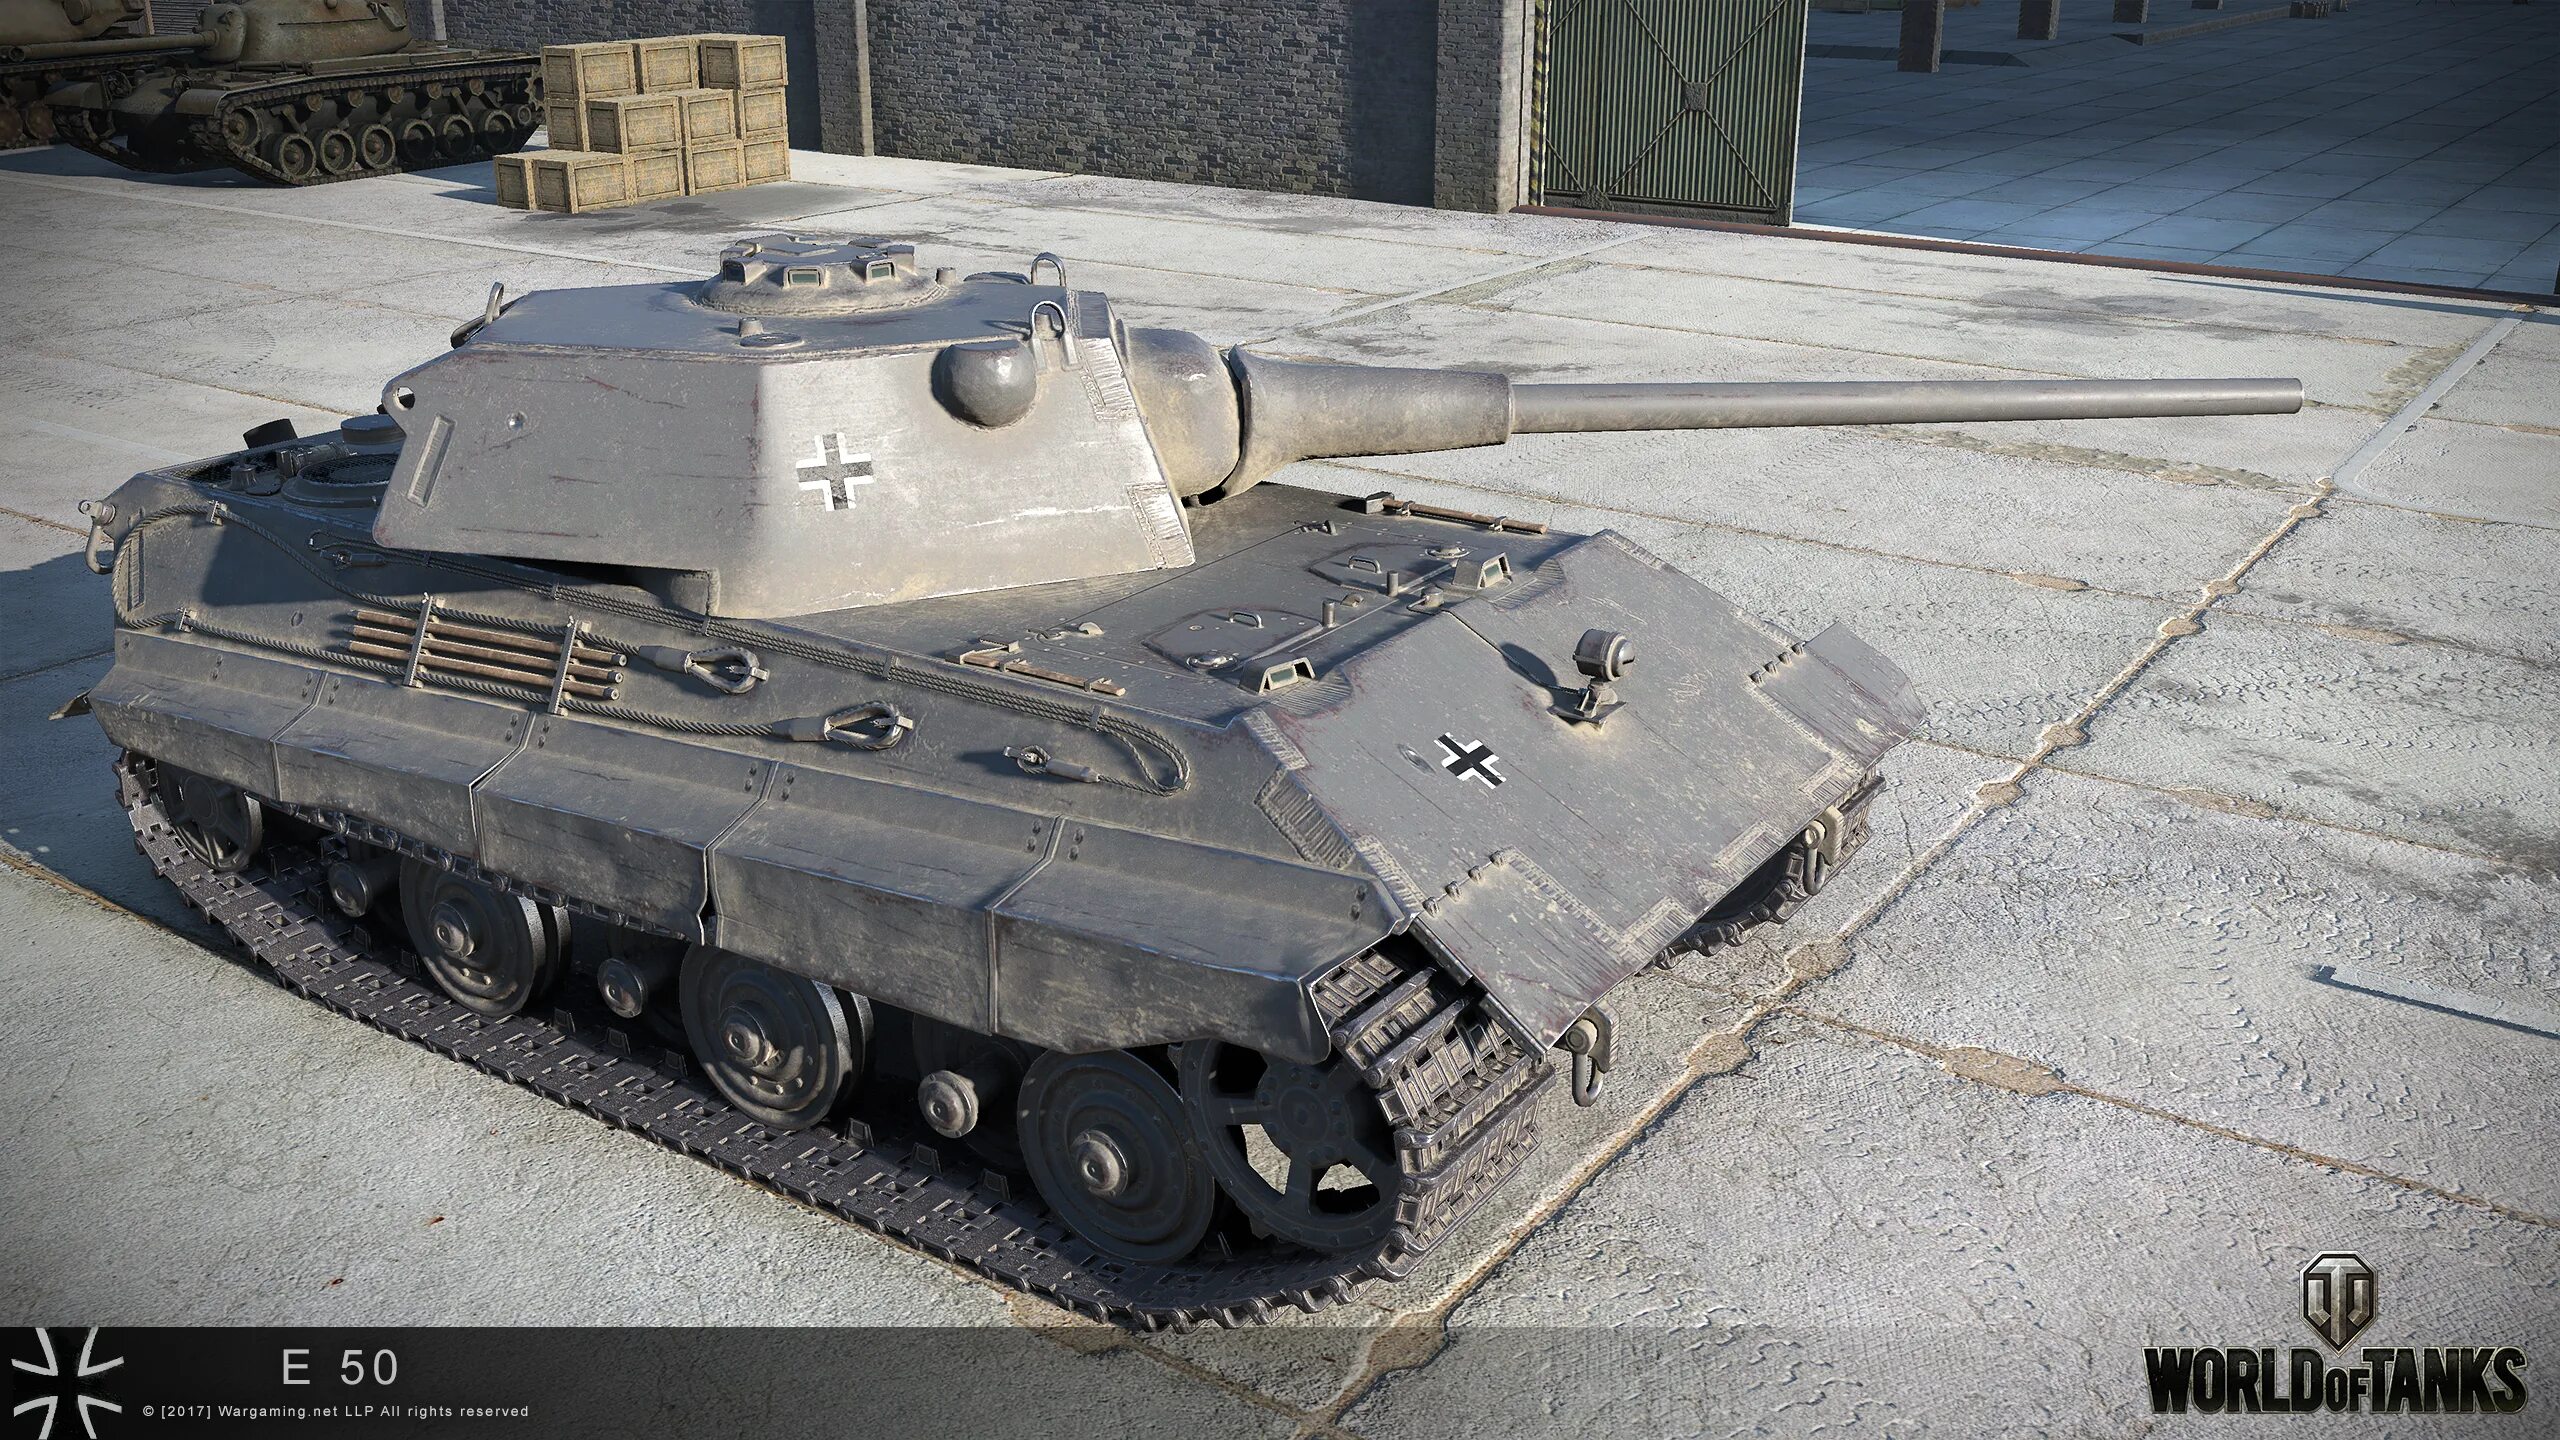 Танк e50m. Е-50 танк ворлд оф танк. Немецкий танк е50. E 50 Ausf. M.